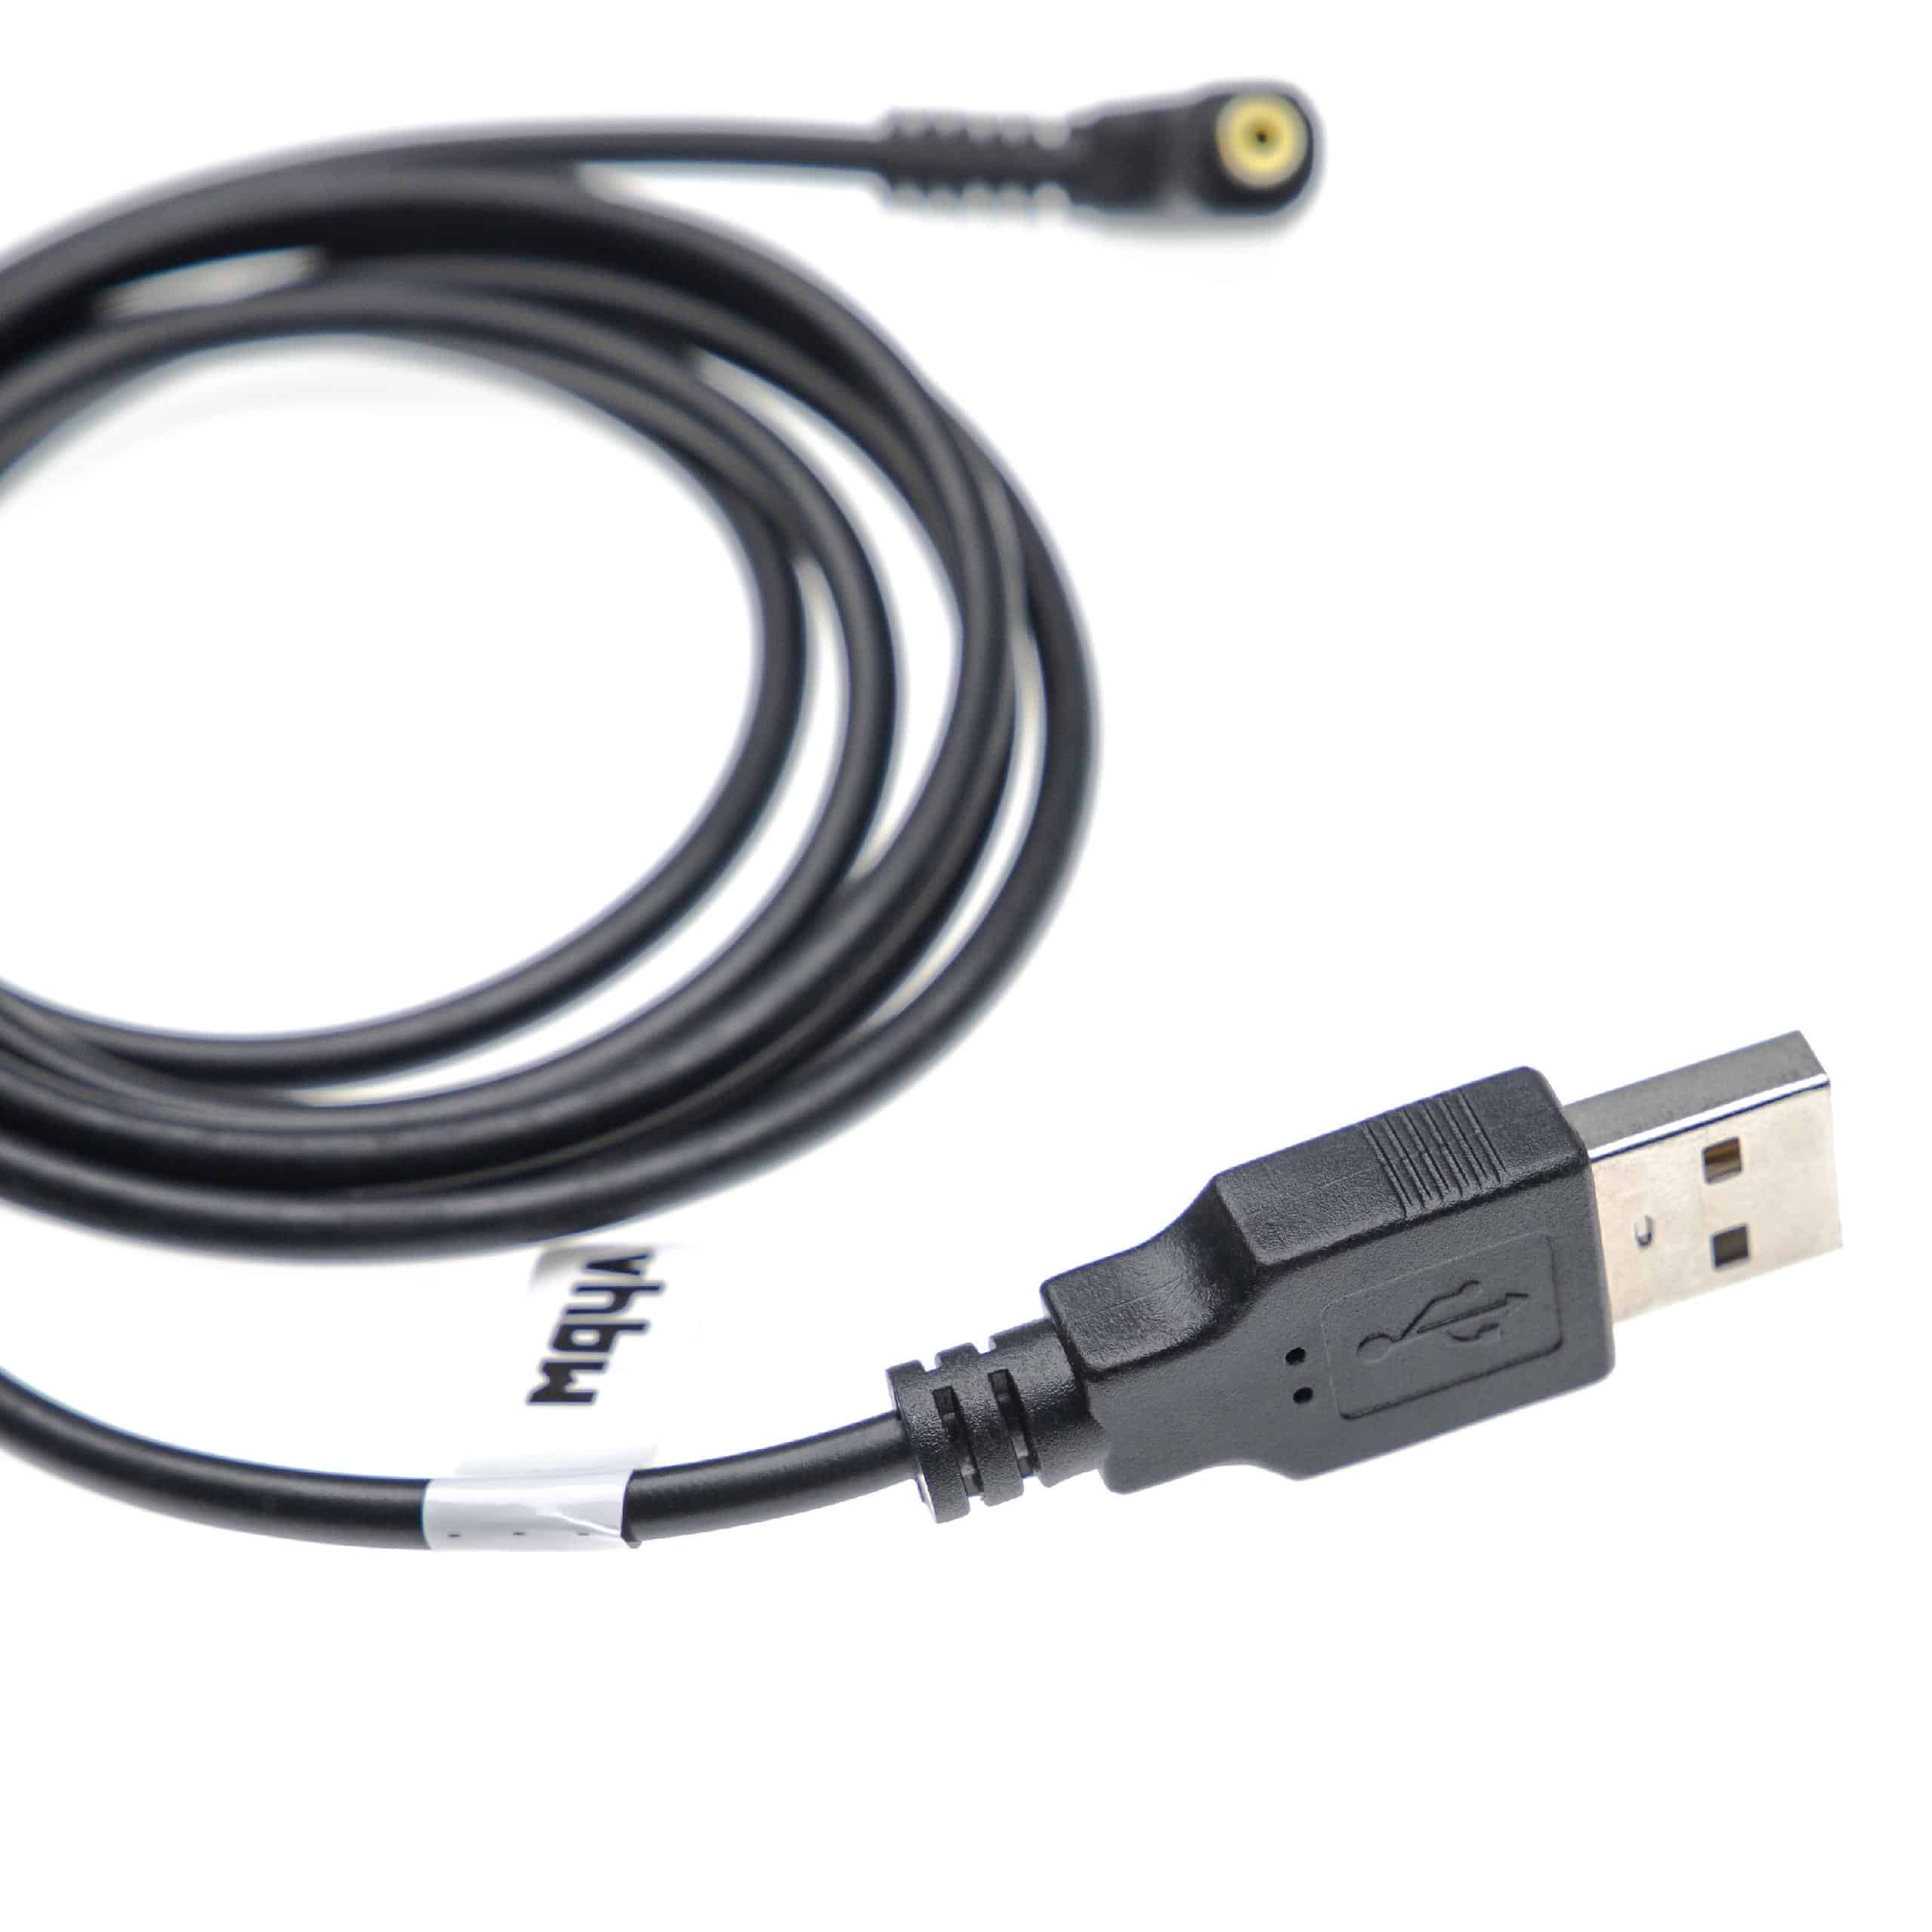 Kabel USB do ładowania aparatu Panasonic zamiennik Panasonic K2GHYYS00002 - 1,2 m